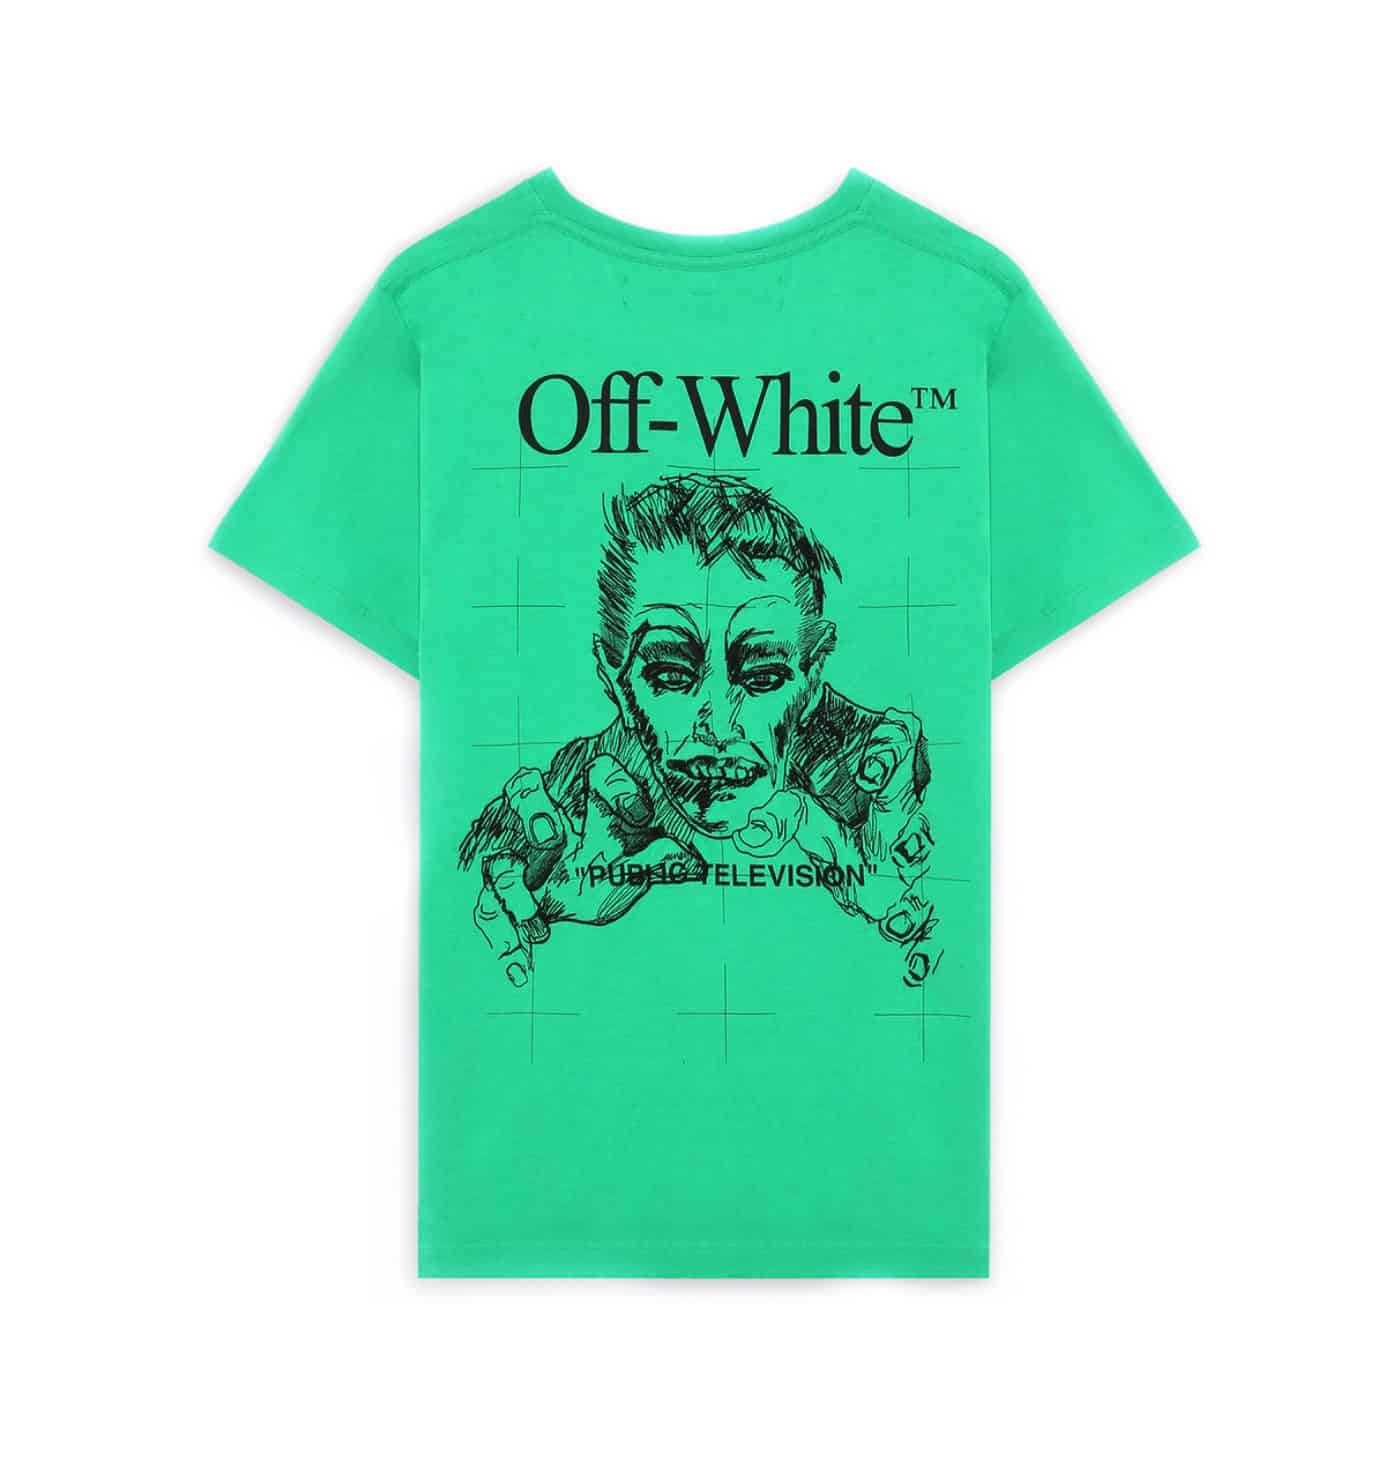 Off-White Public Television T-Shirt Green/Black Off-White